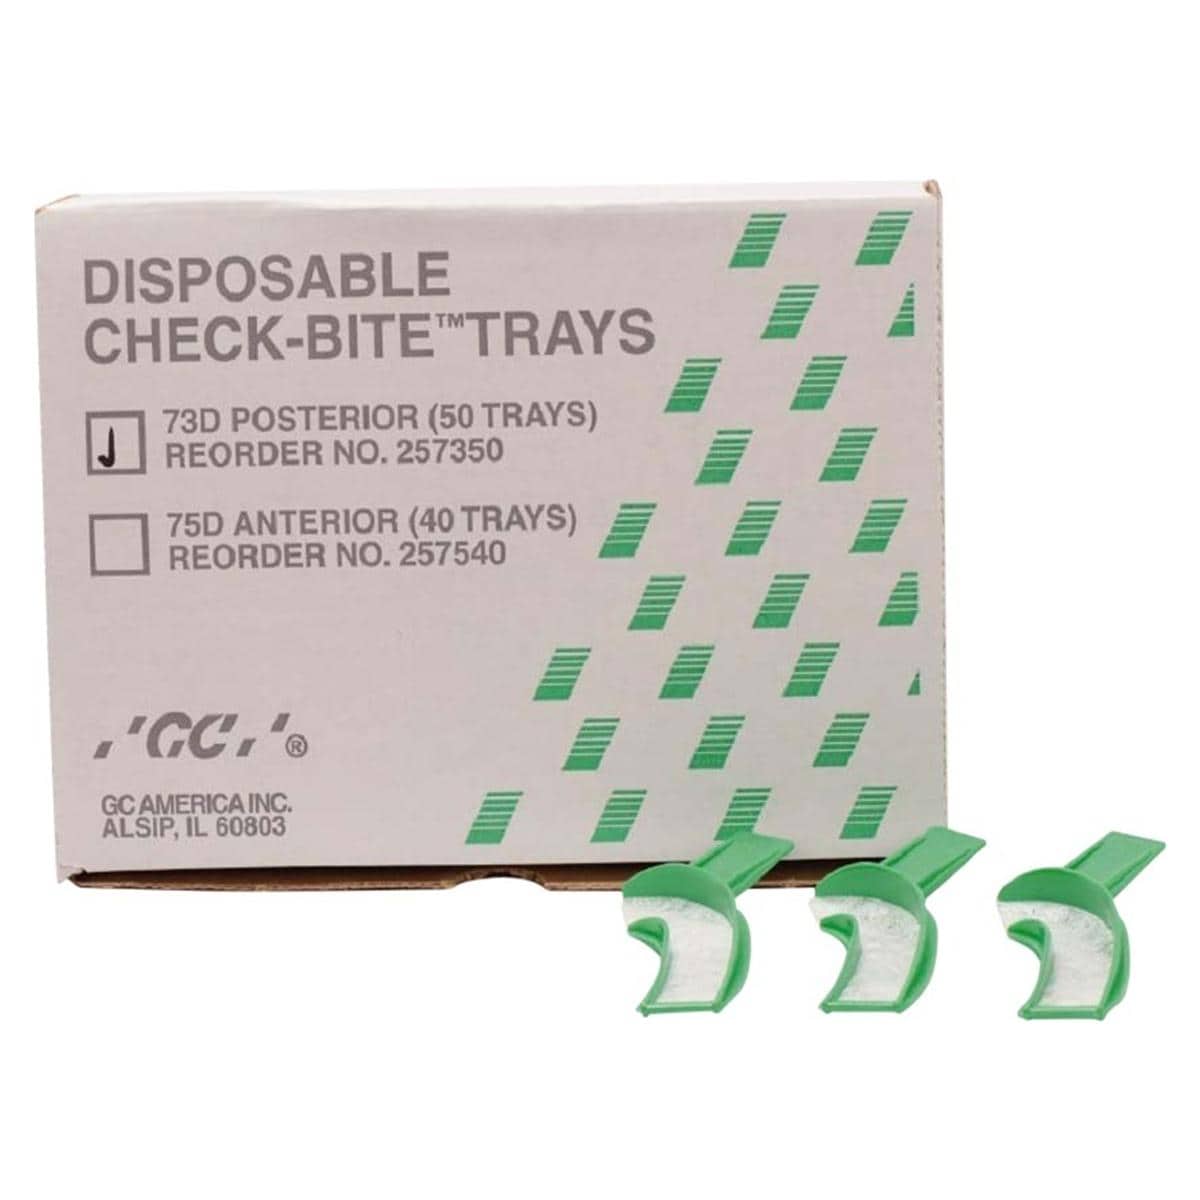 Check-Bite trays posterior - 73D, 50 pcs